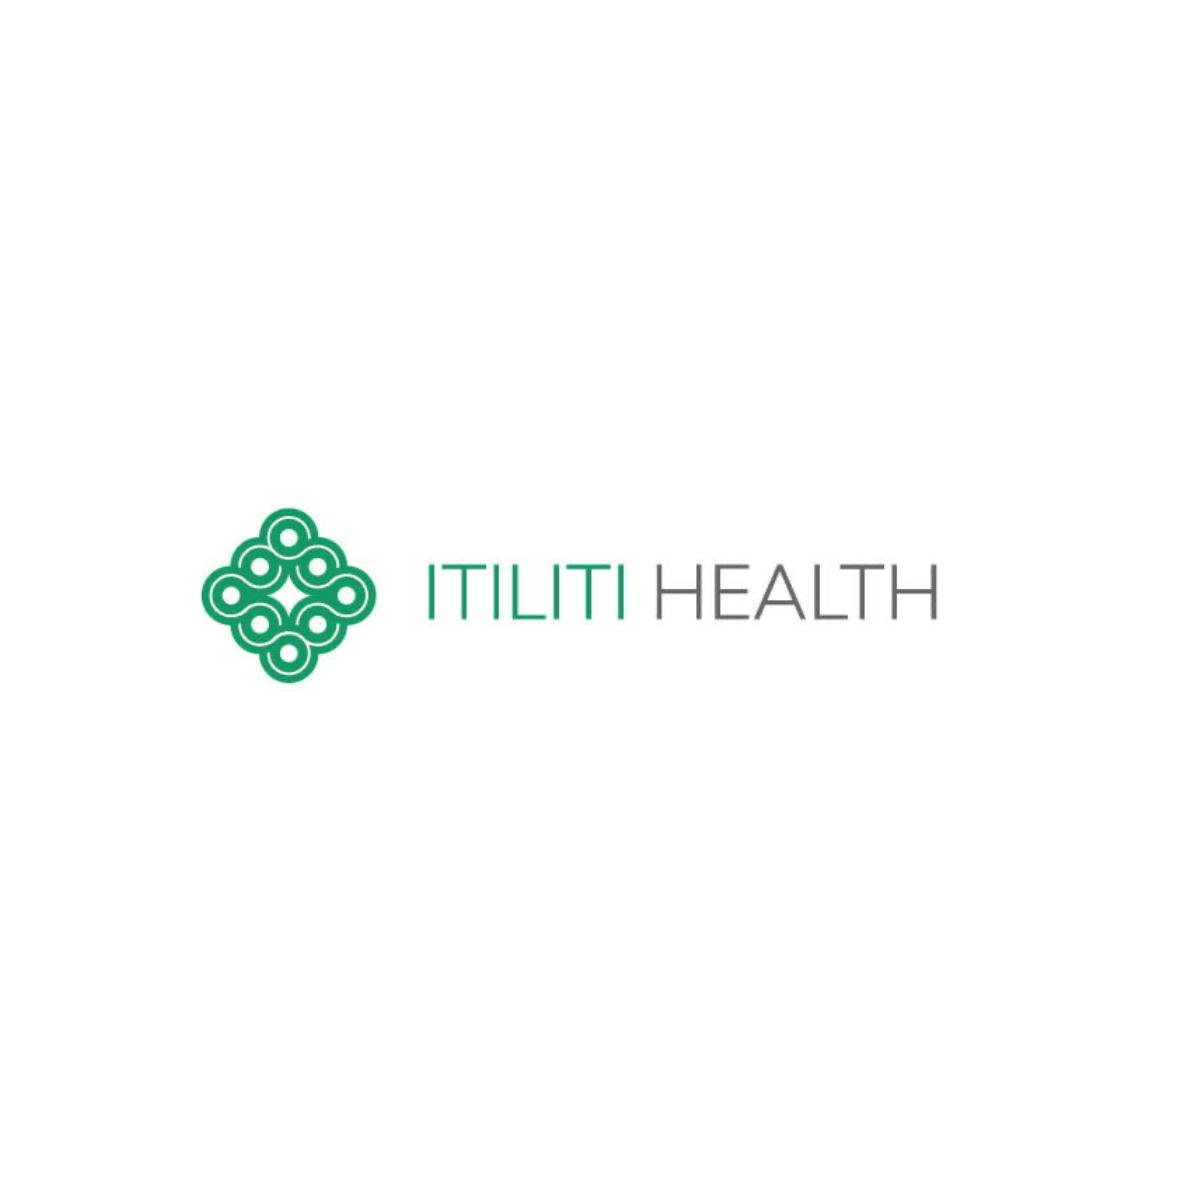 Itiliti Health